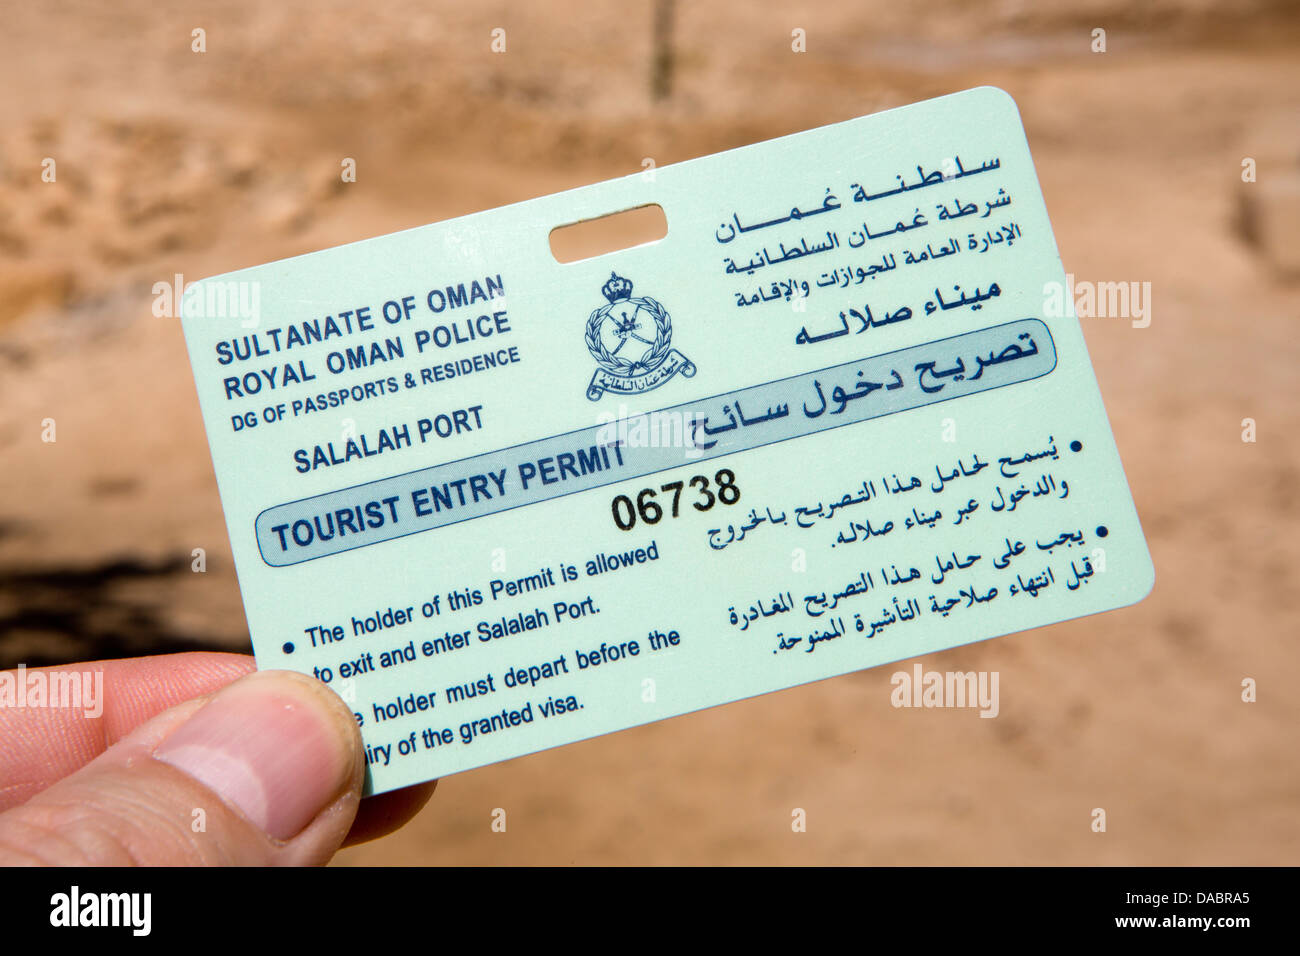 Oman, Dhofar, Salalah, Police Tourist Entry Permit Stock Photo - Alamy